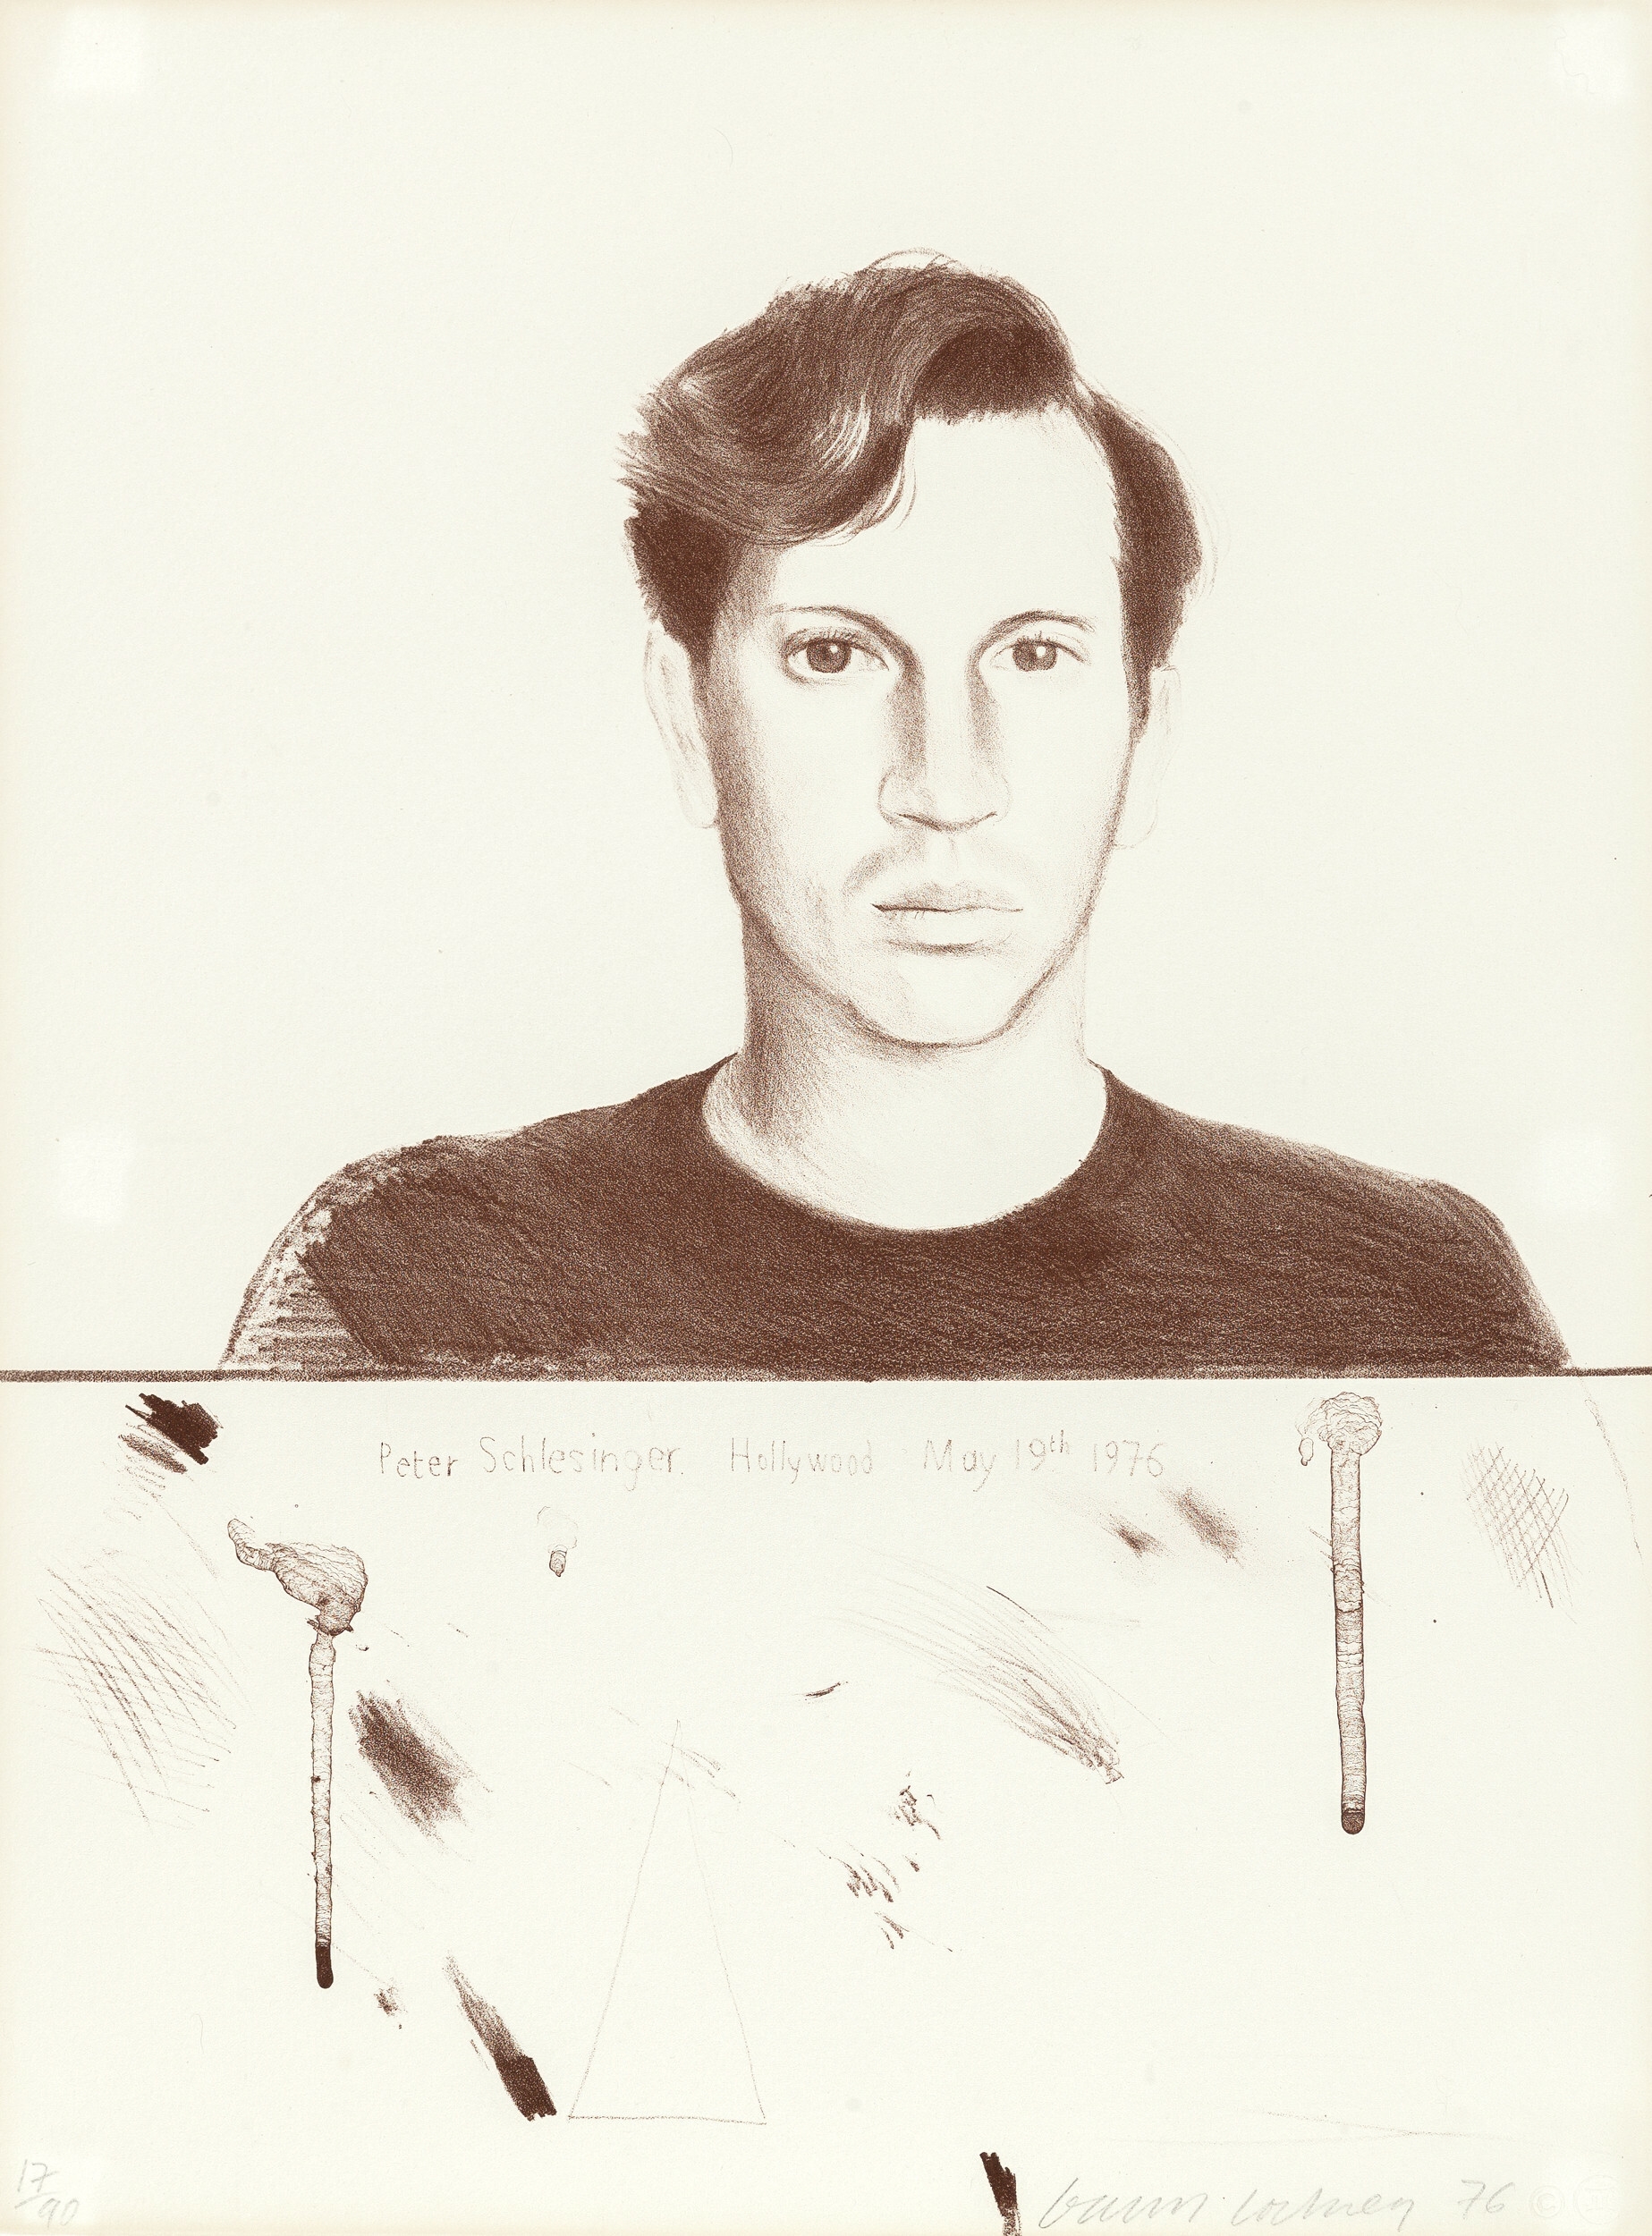 Peter Schlesinger (1976 - David Hockney